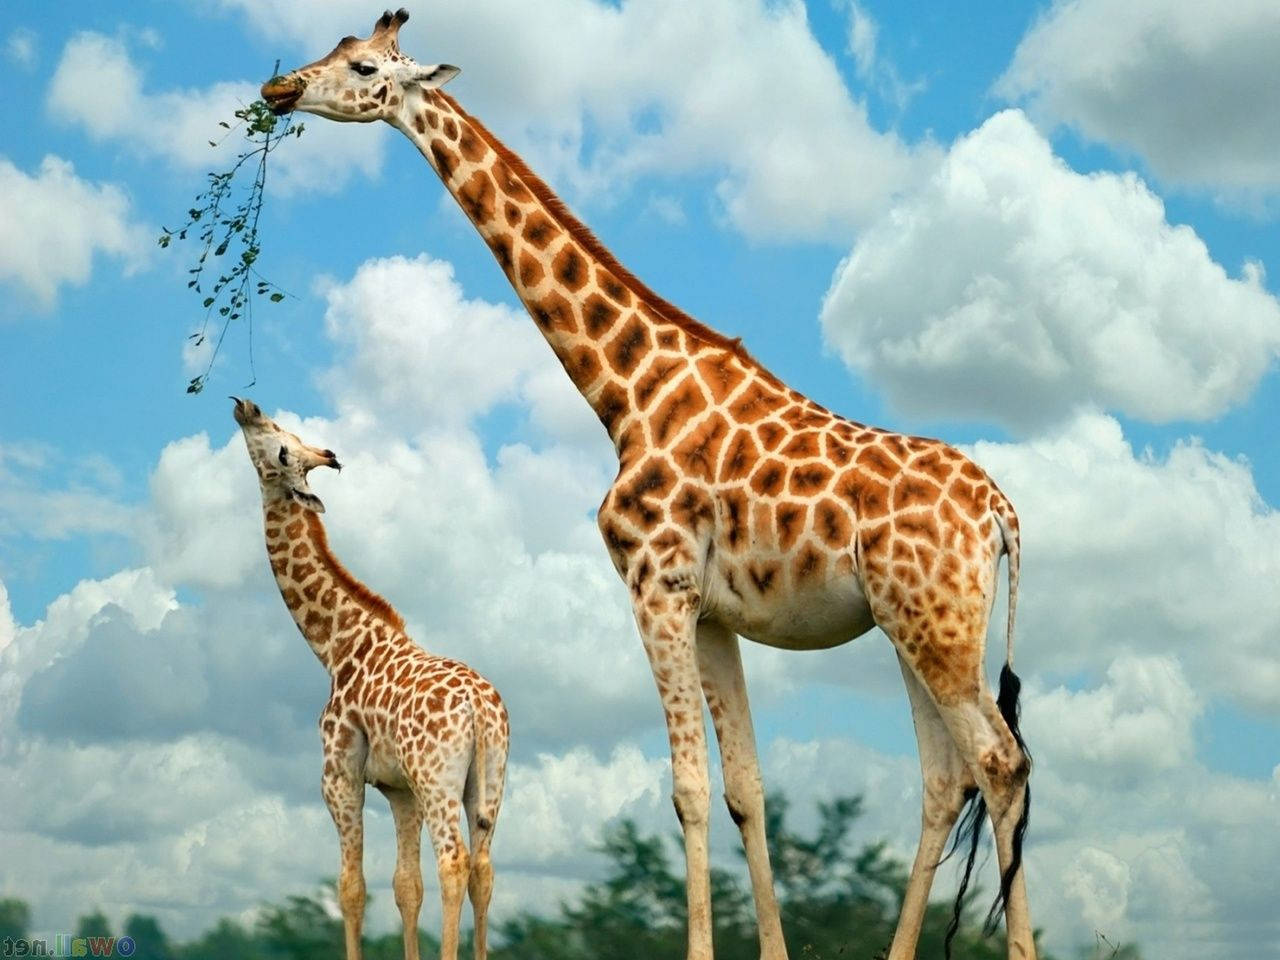 A Baby Giraffe's Feeding Time Background